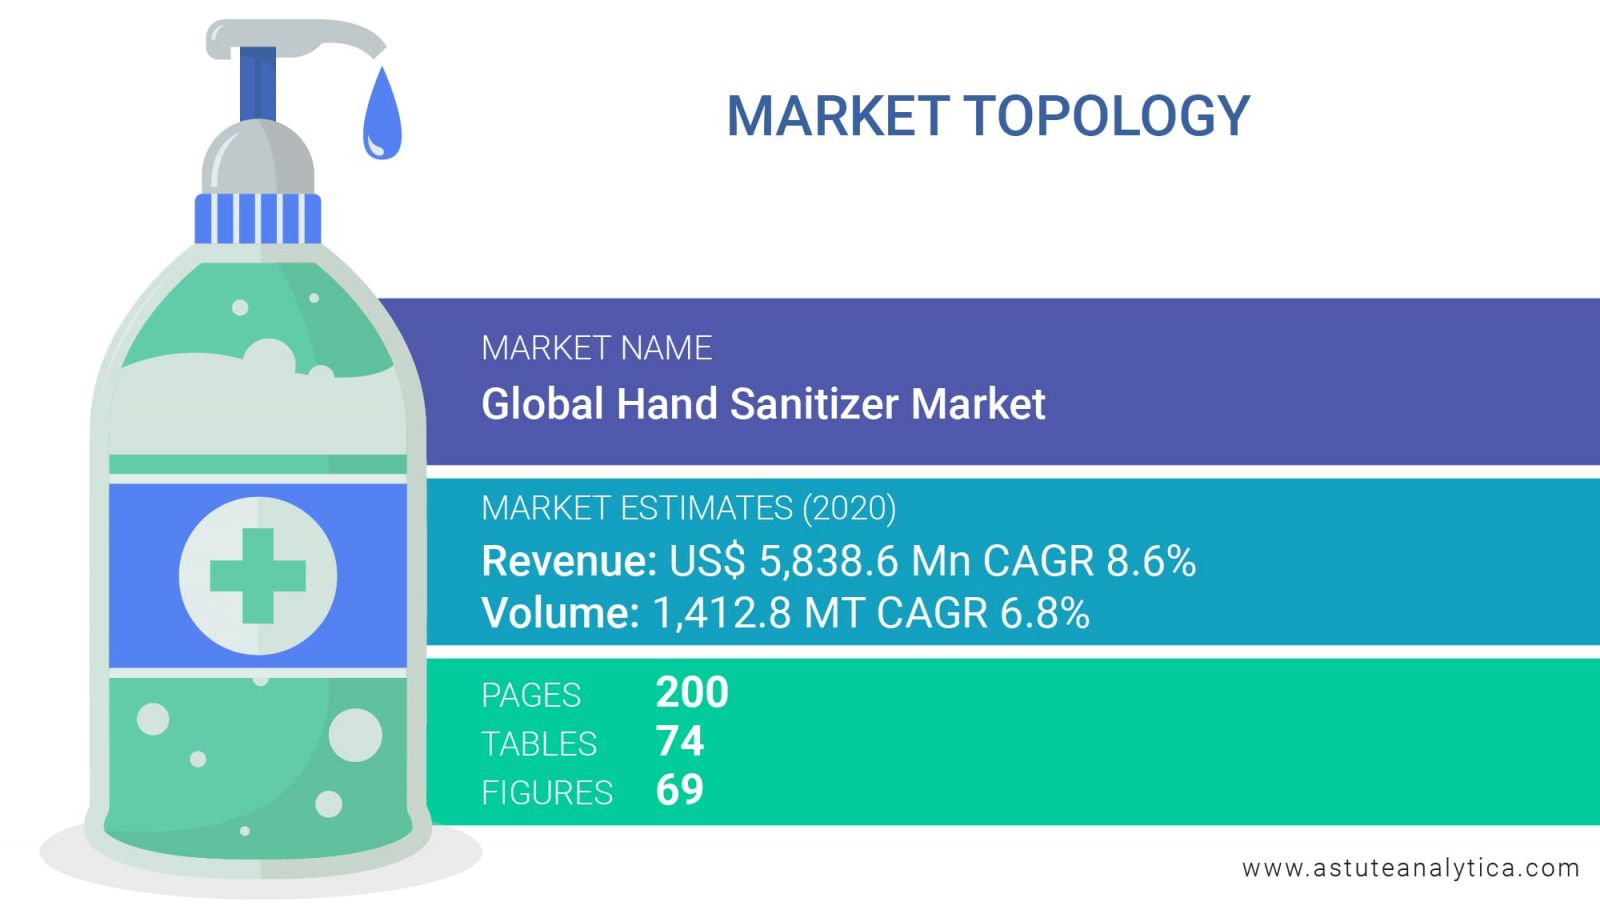 Hand sanitizer market topology